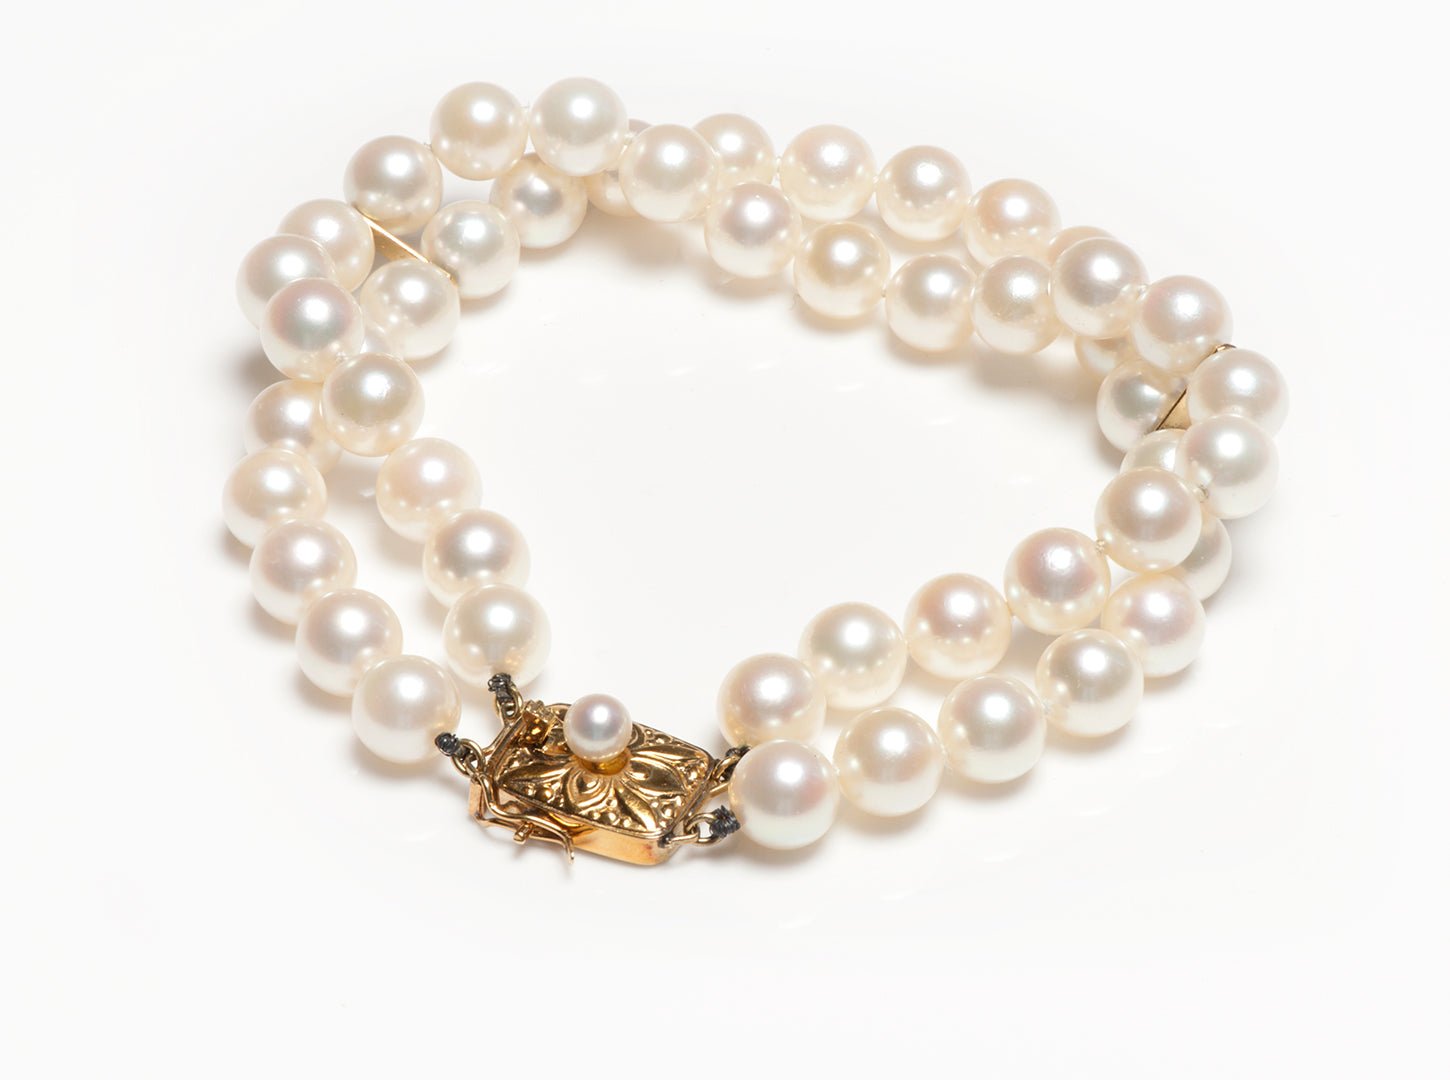 Mikimoto 18K Gold Akoya Pearl Bracelet